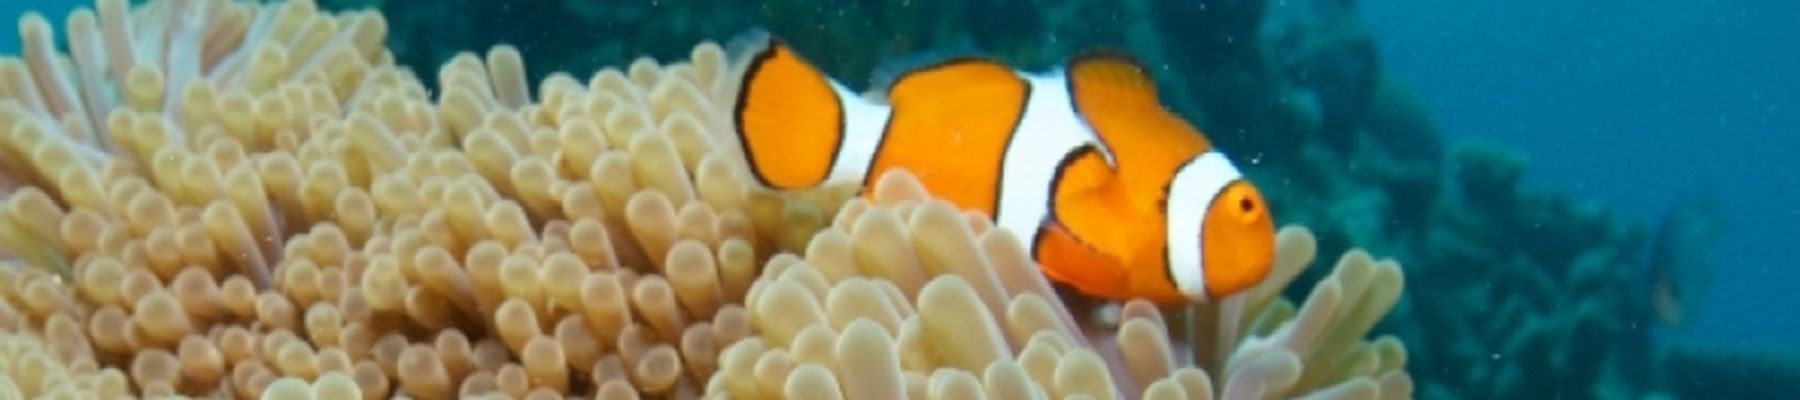 Clownfish underwater shot 